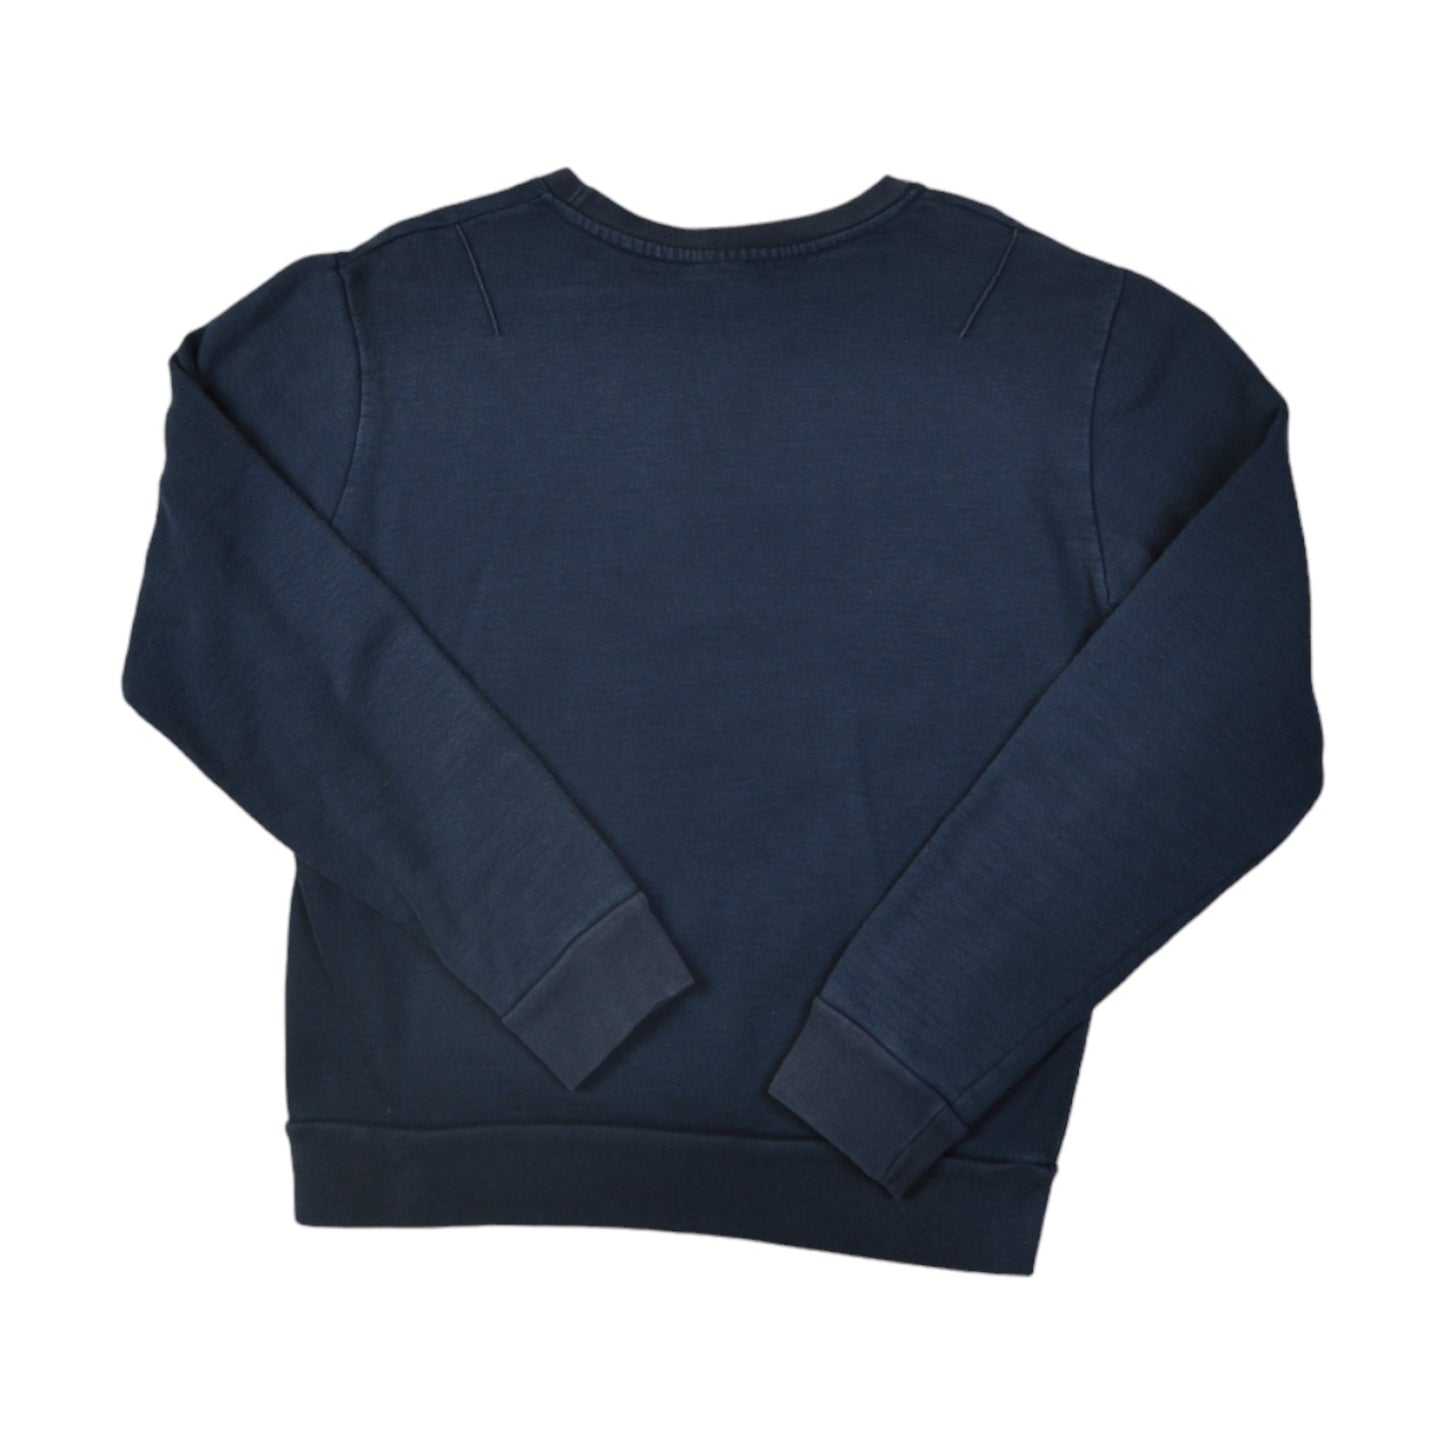 Vintage New York Brooklyn Sweater Navy Small